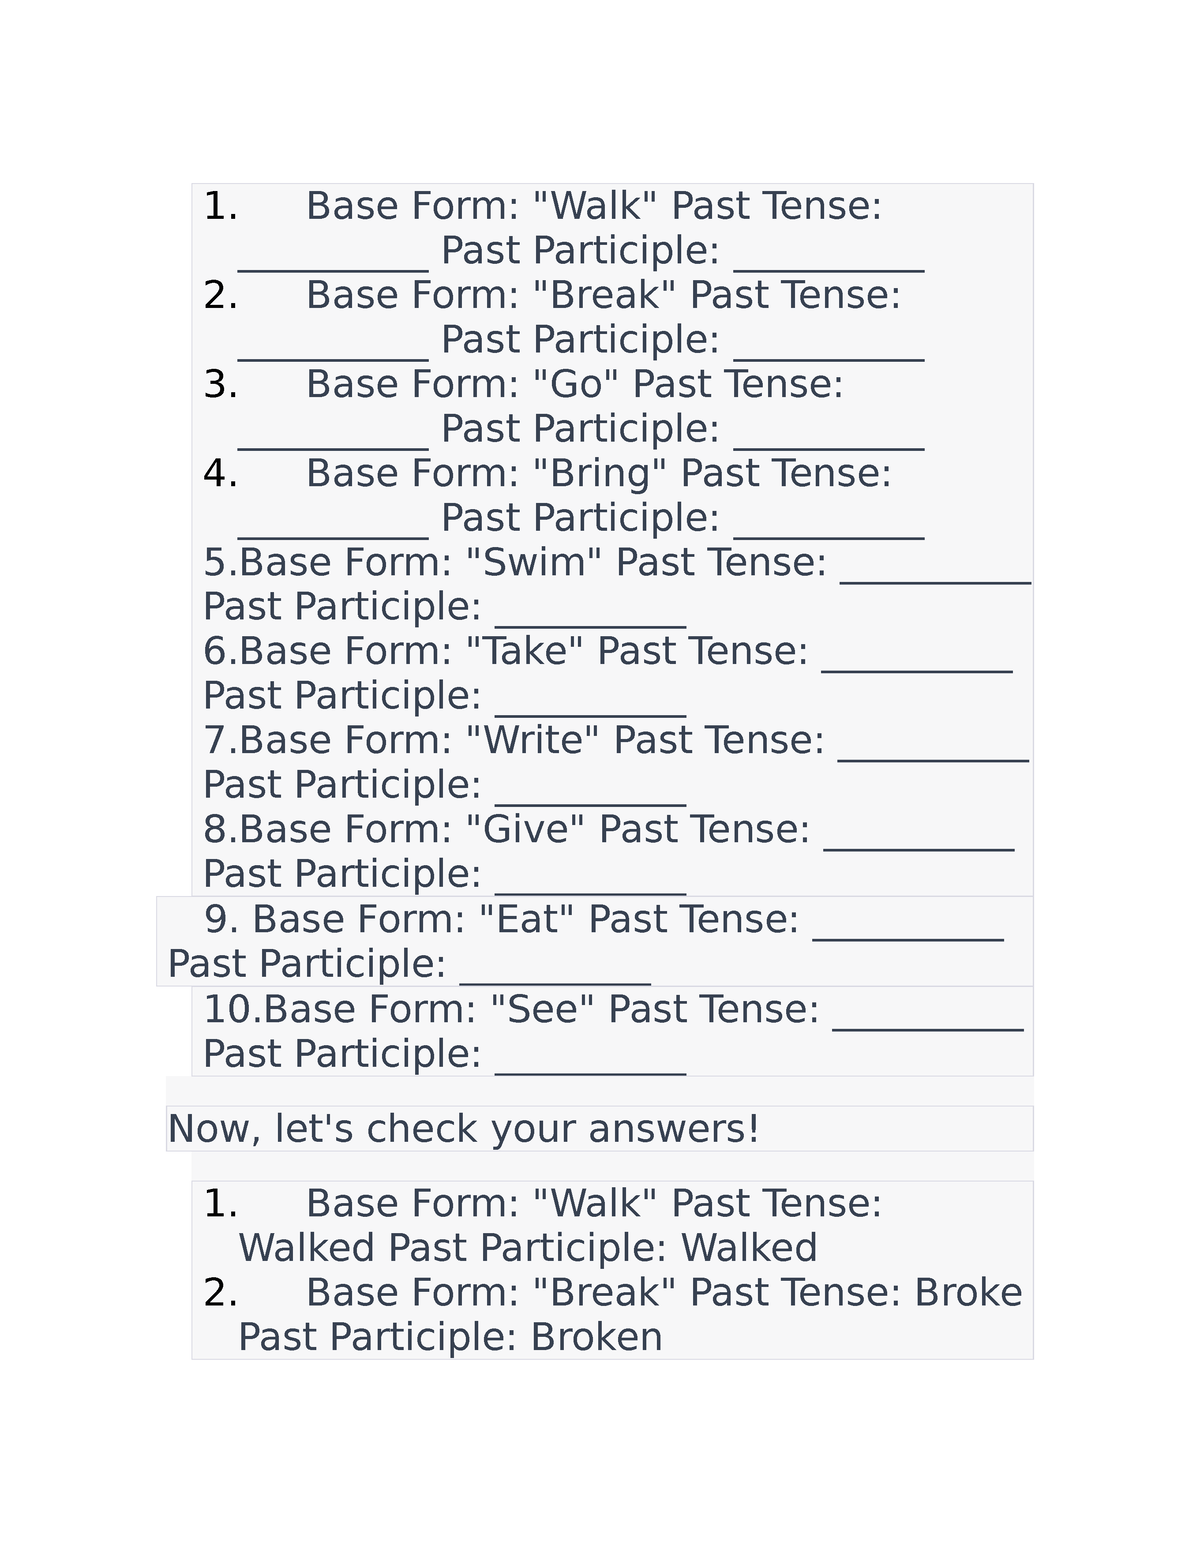 past-and-past-participle-quiz-of-regular-and-irregular-verbs-base-form-walk-past-studocu